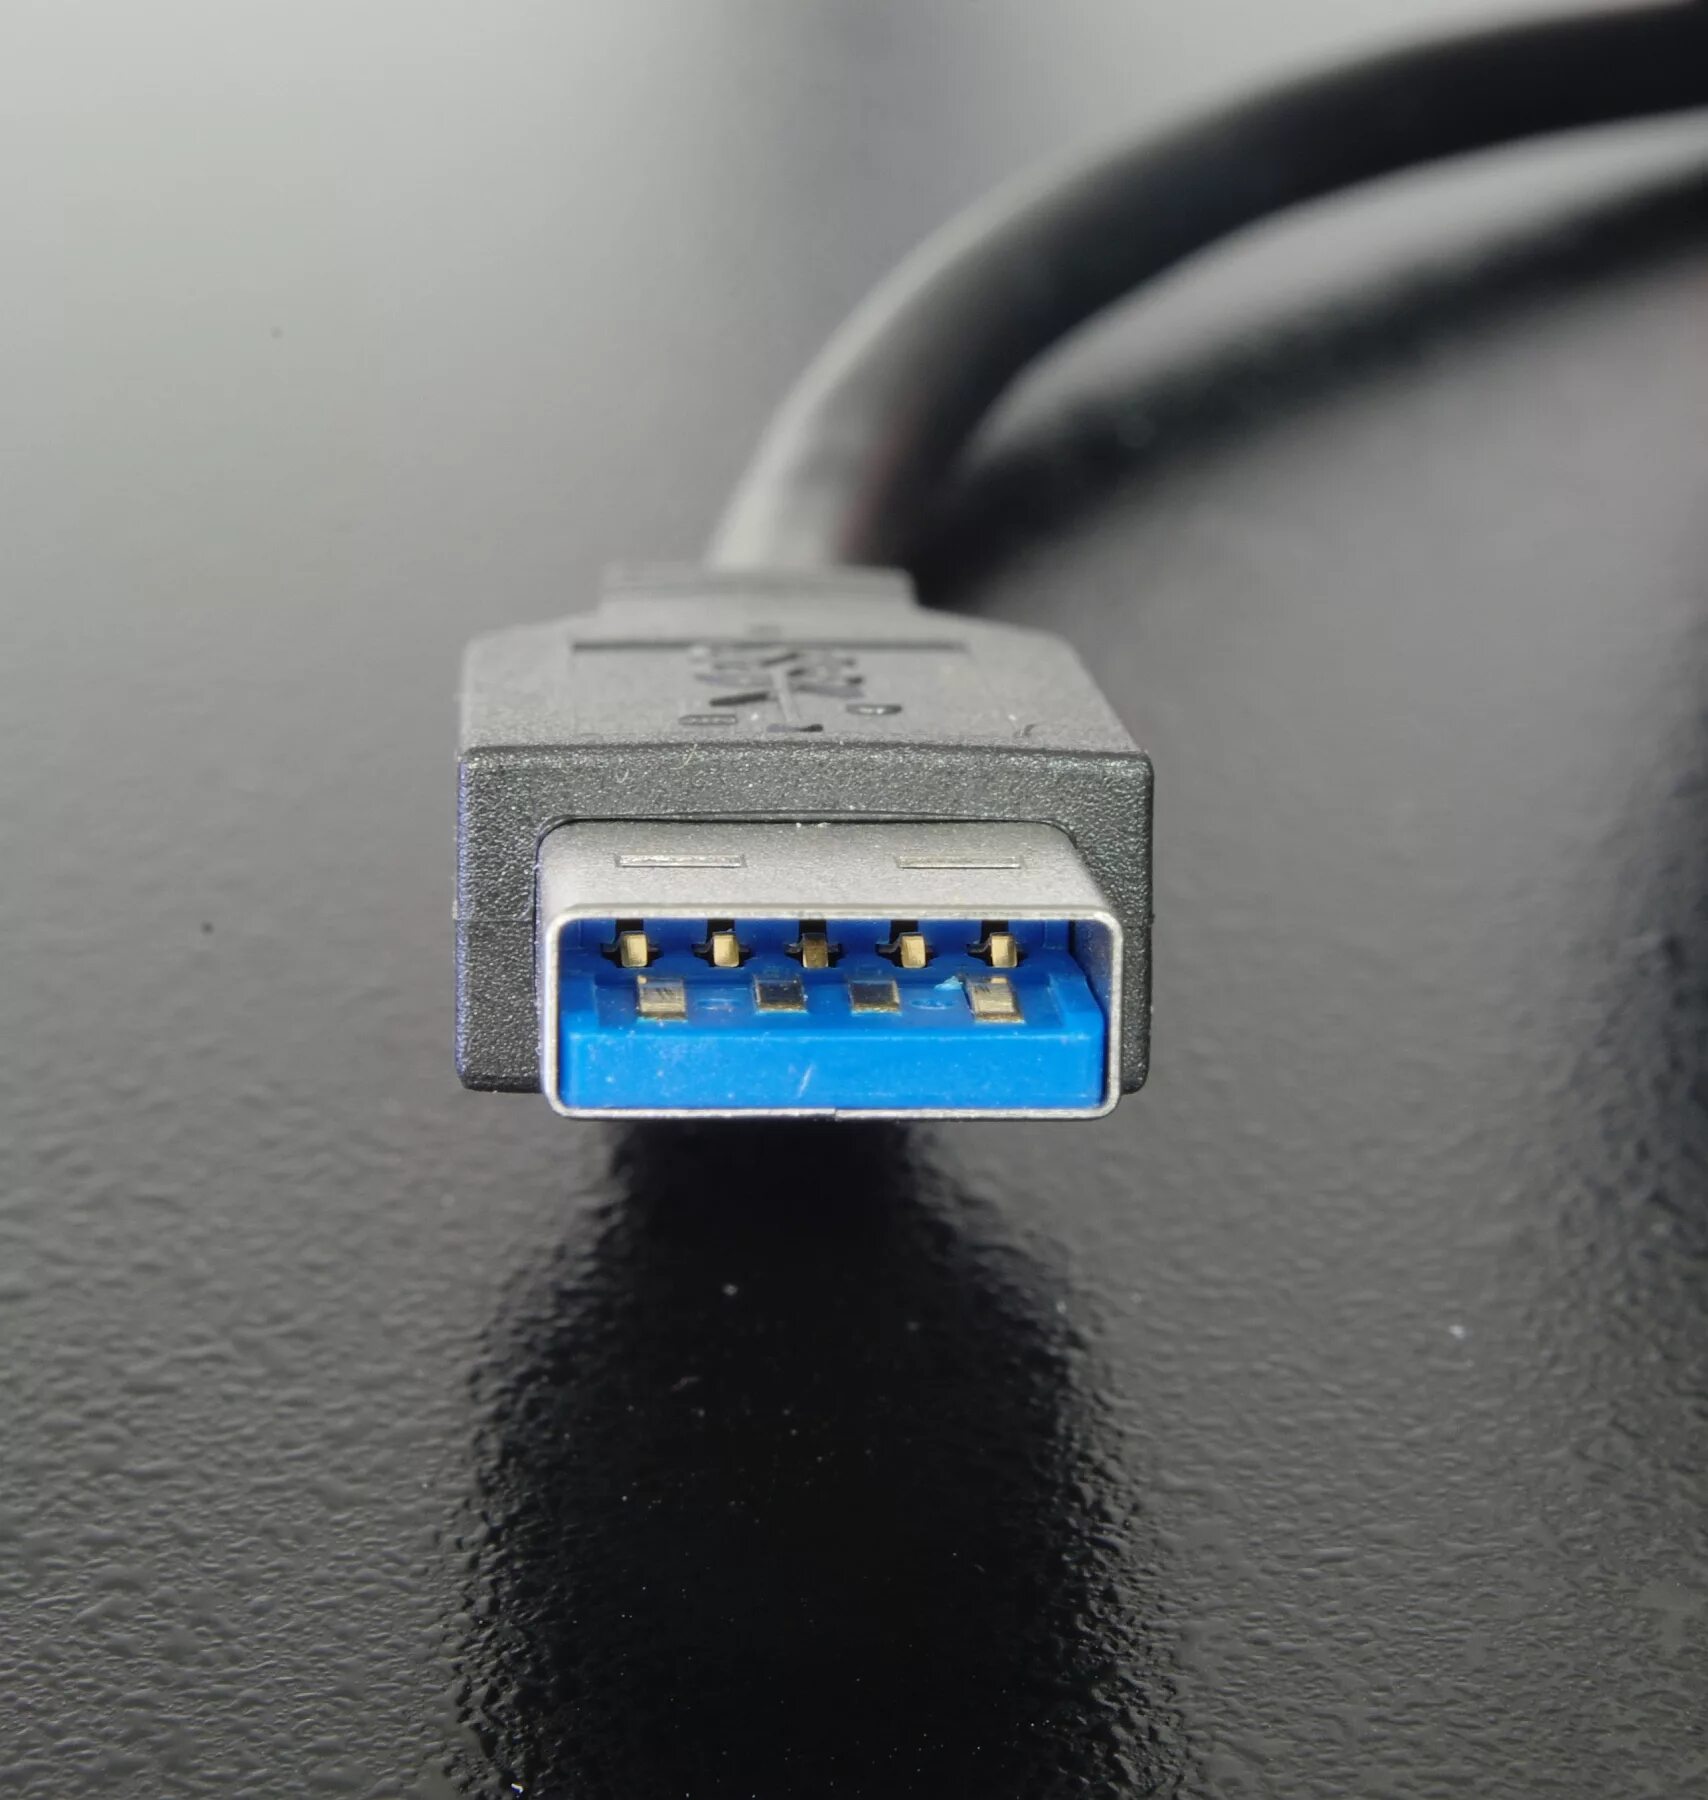 Usb connection. Разъем USB 2.0 286ma. Разъем юсб 3.0. Разъёмы USB 2.0 И USB 3.0. USB 3.2 gen2 разъем.